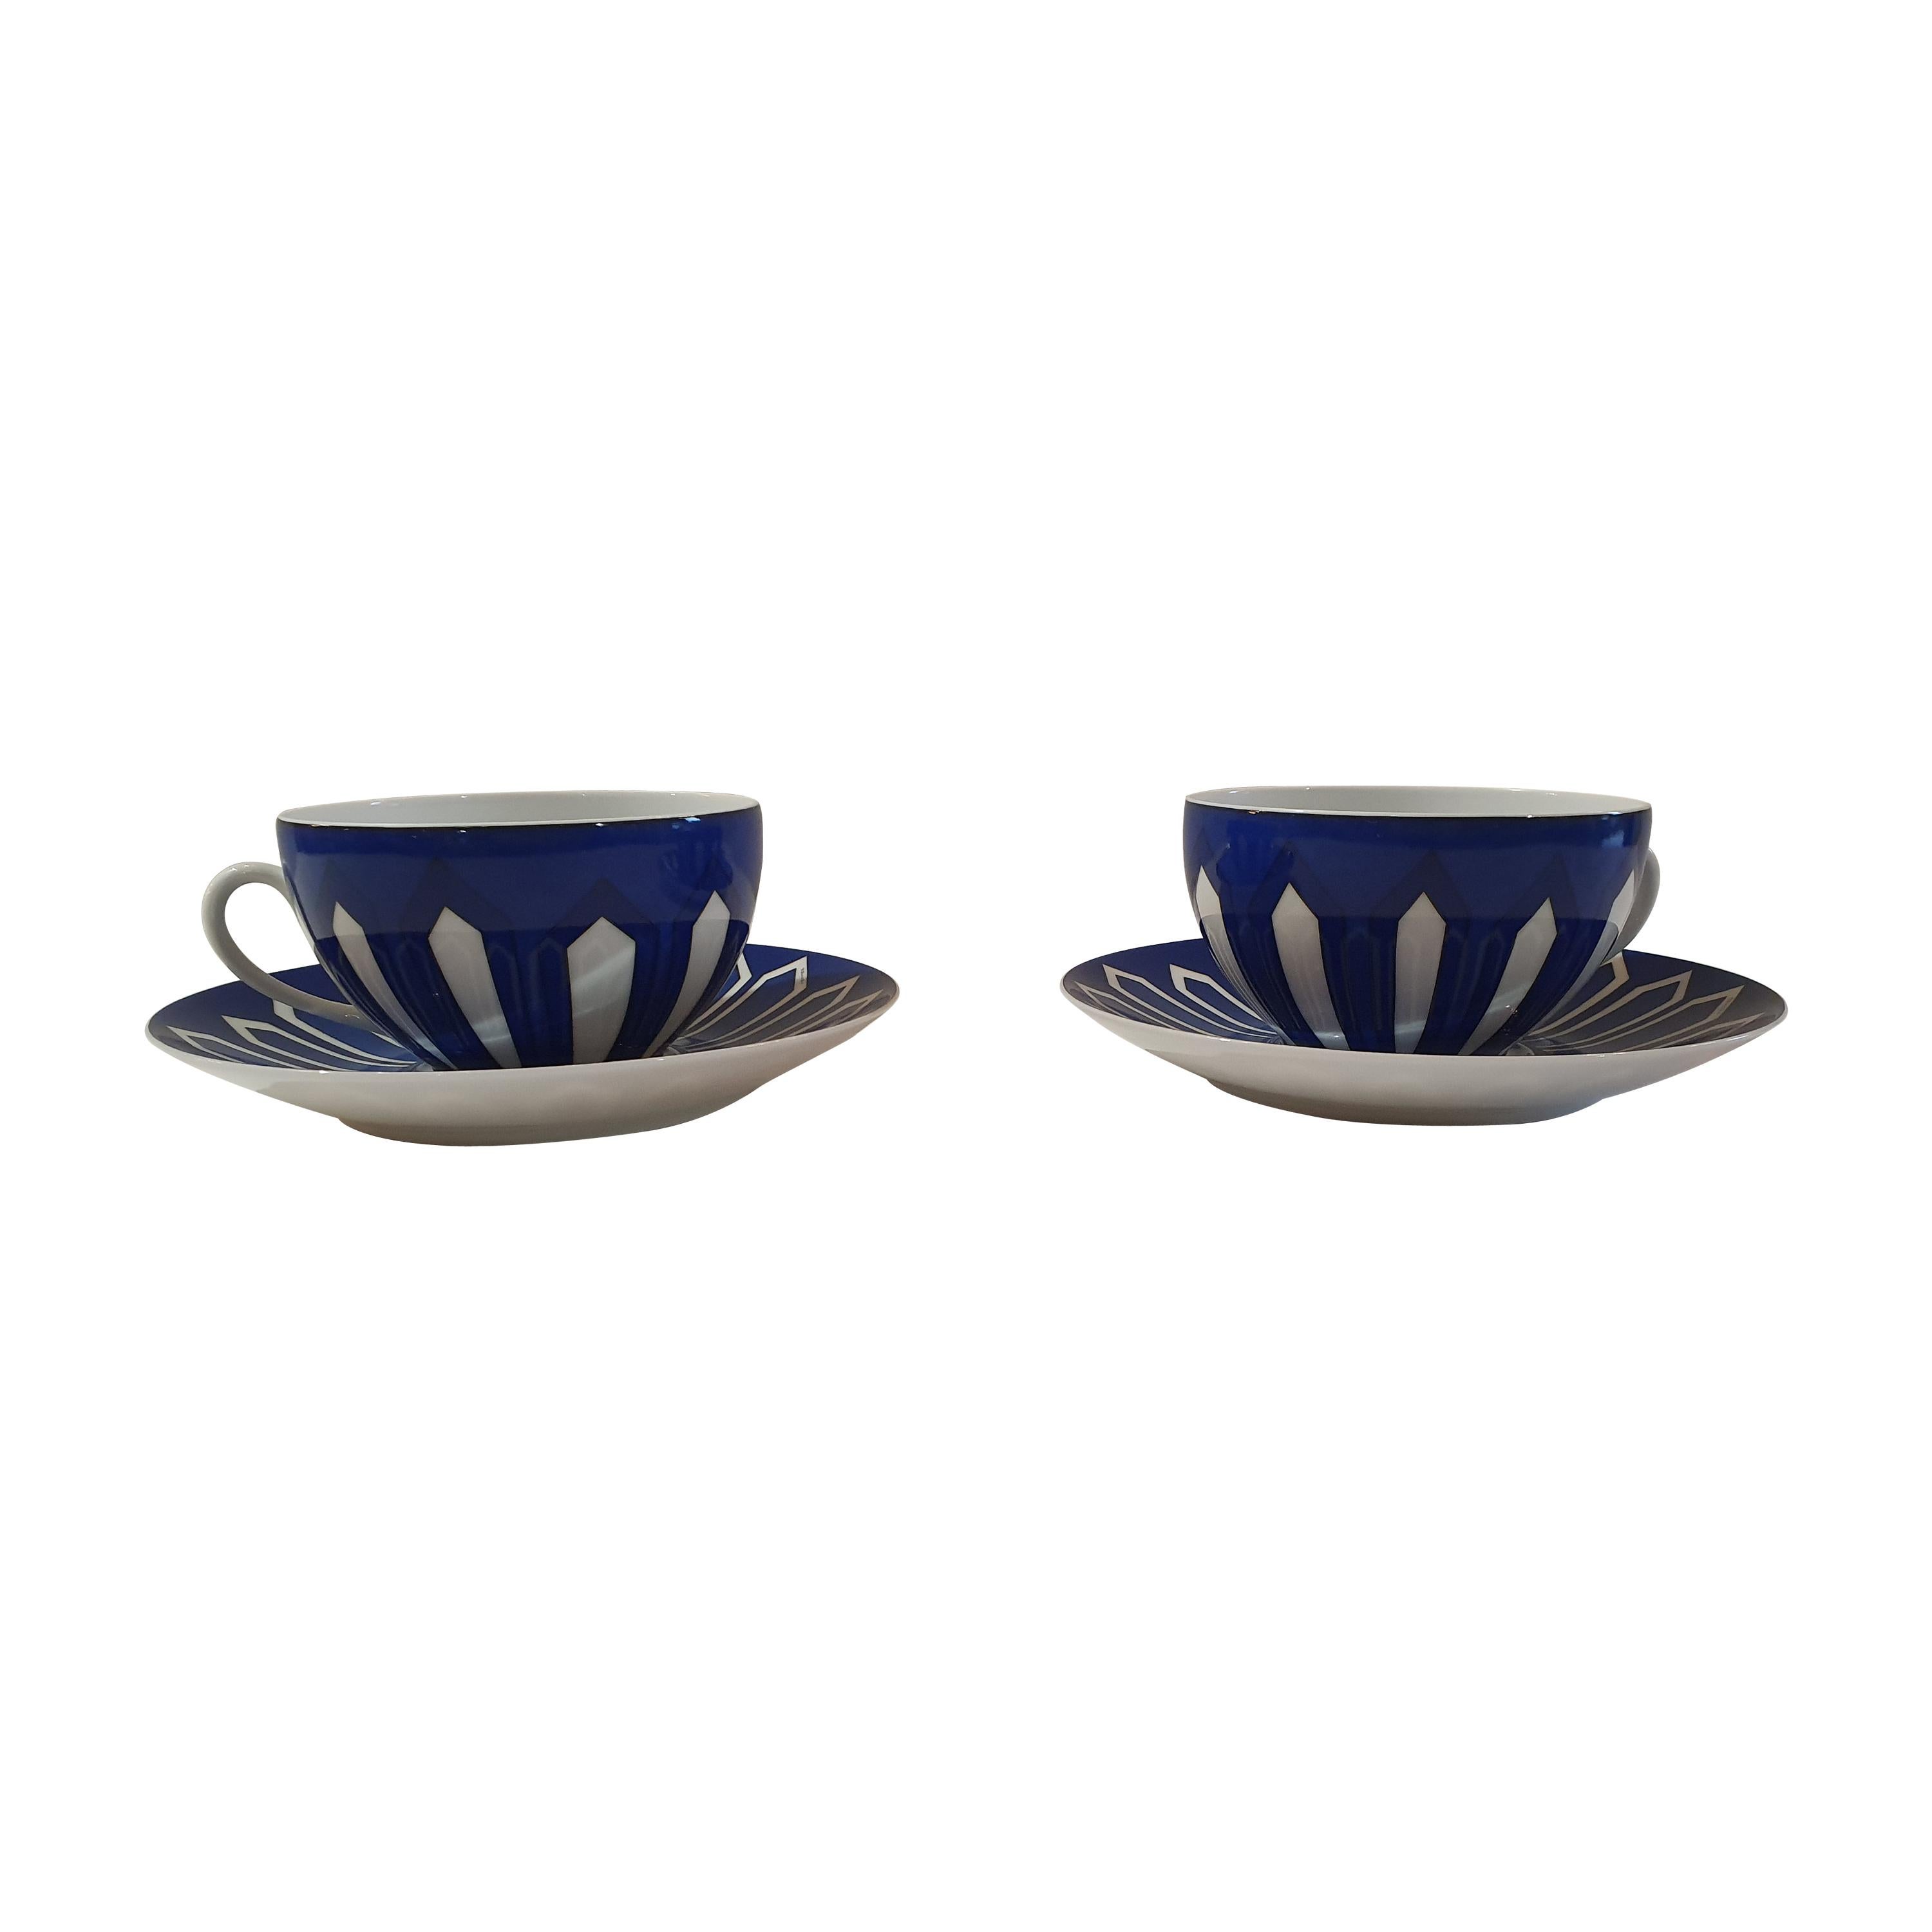 Hermès Porcelain "Bleus d'Ailleurs" Pair of Breakfast Cups, France, Modern